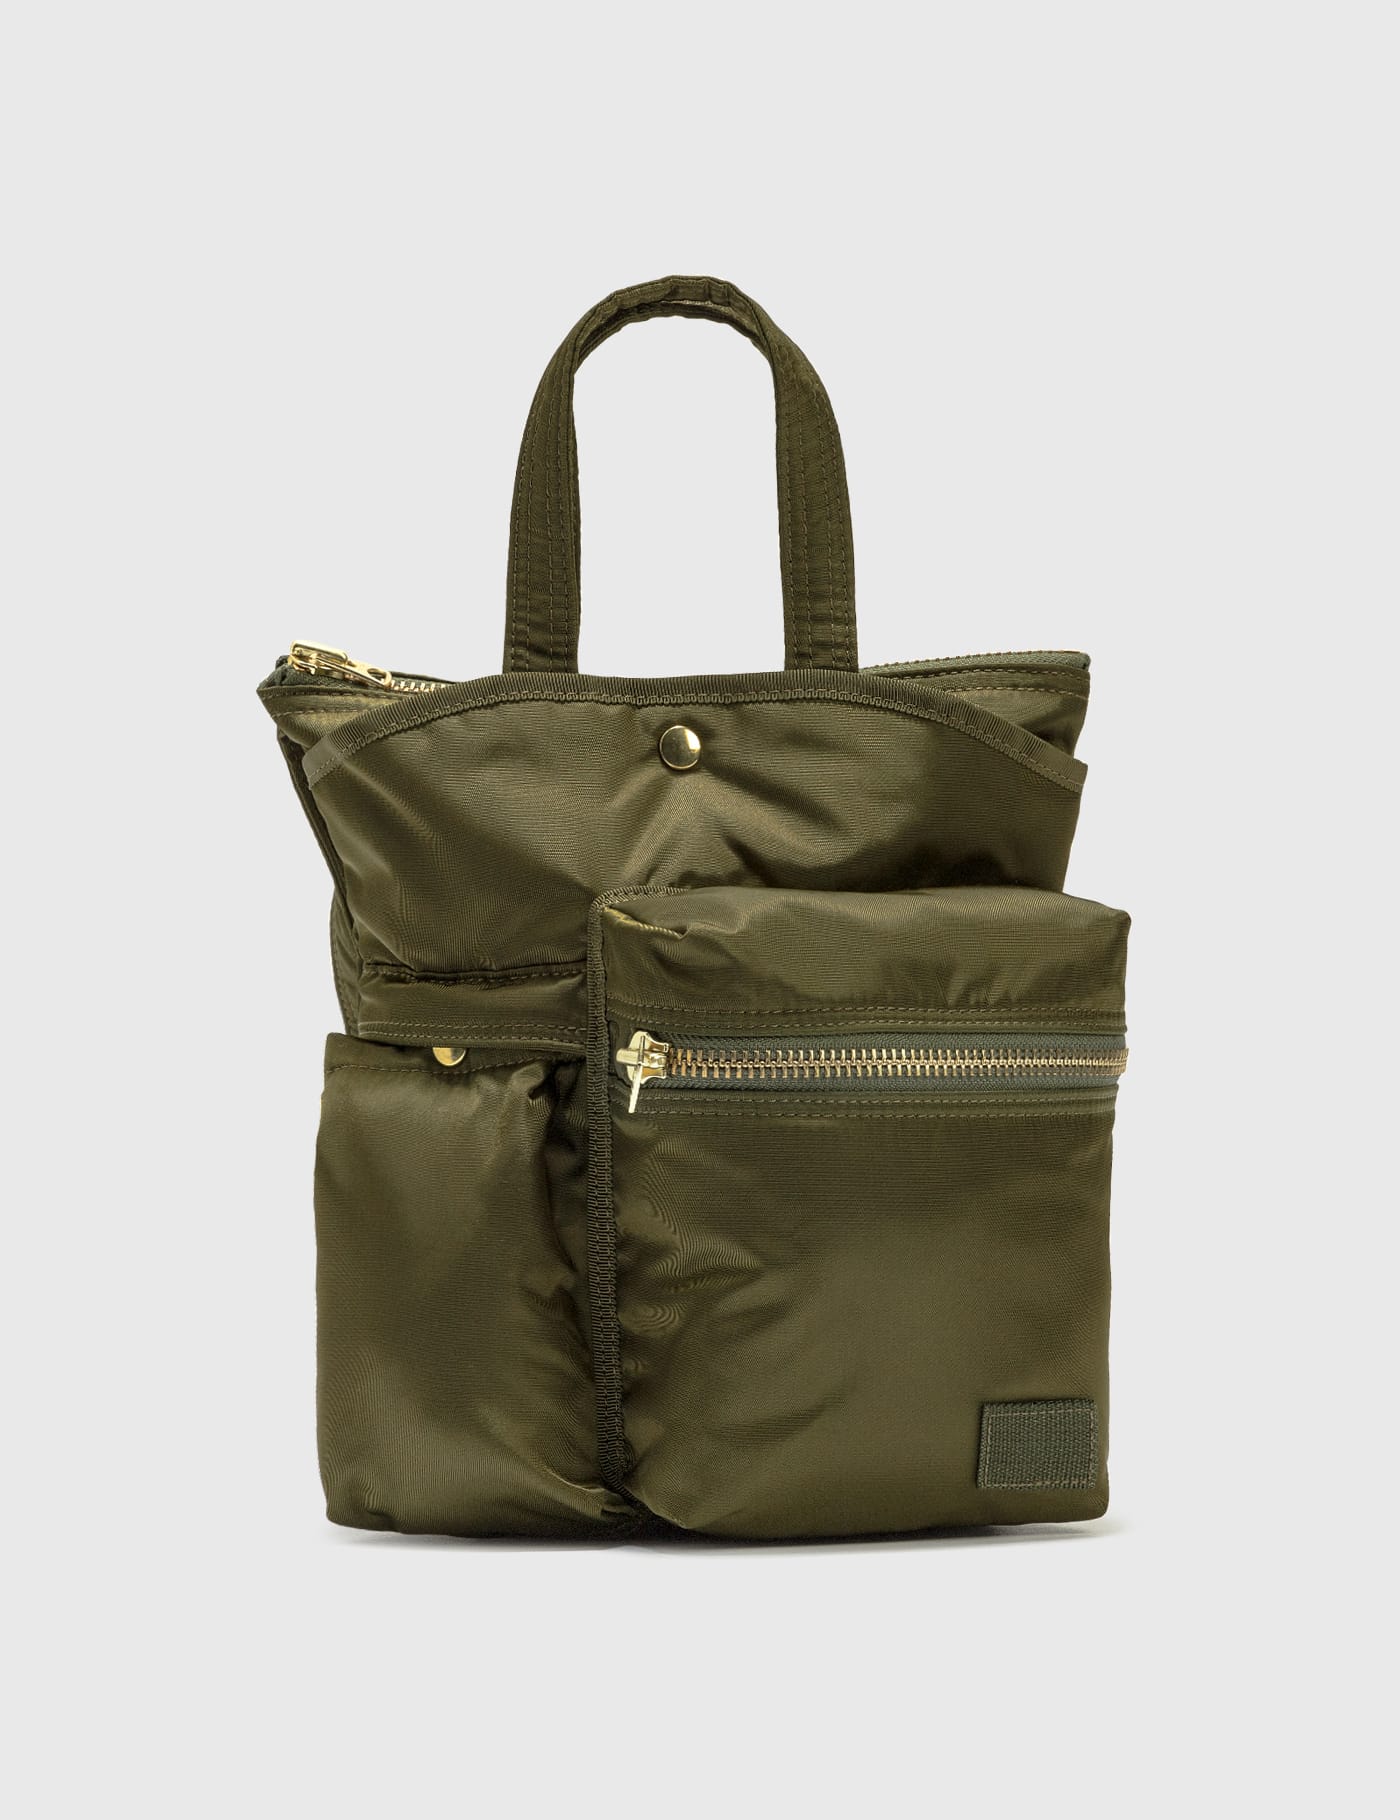 Sacai - Sacai x Porter Pocket Bag | HBX - Globally Curated Fashion 